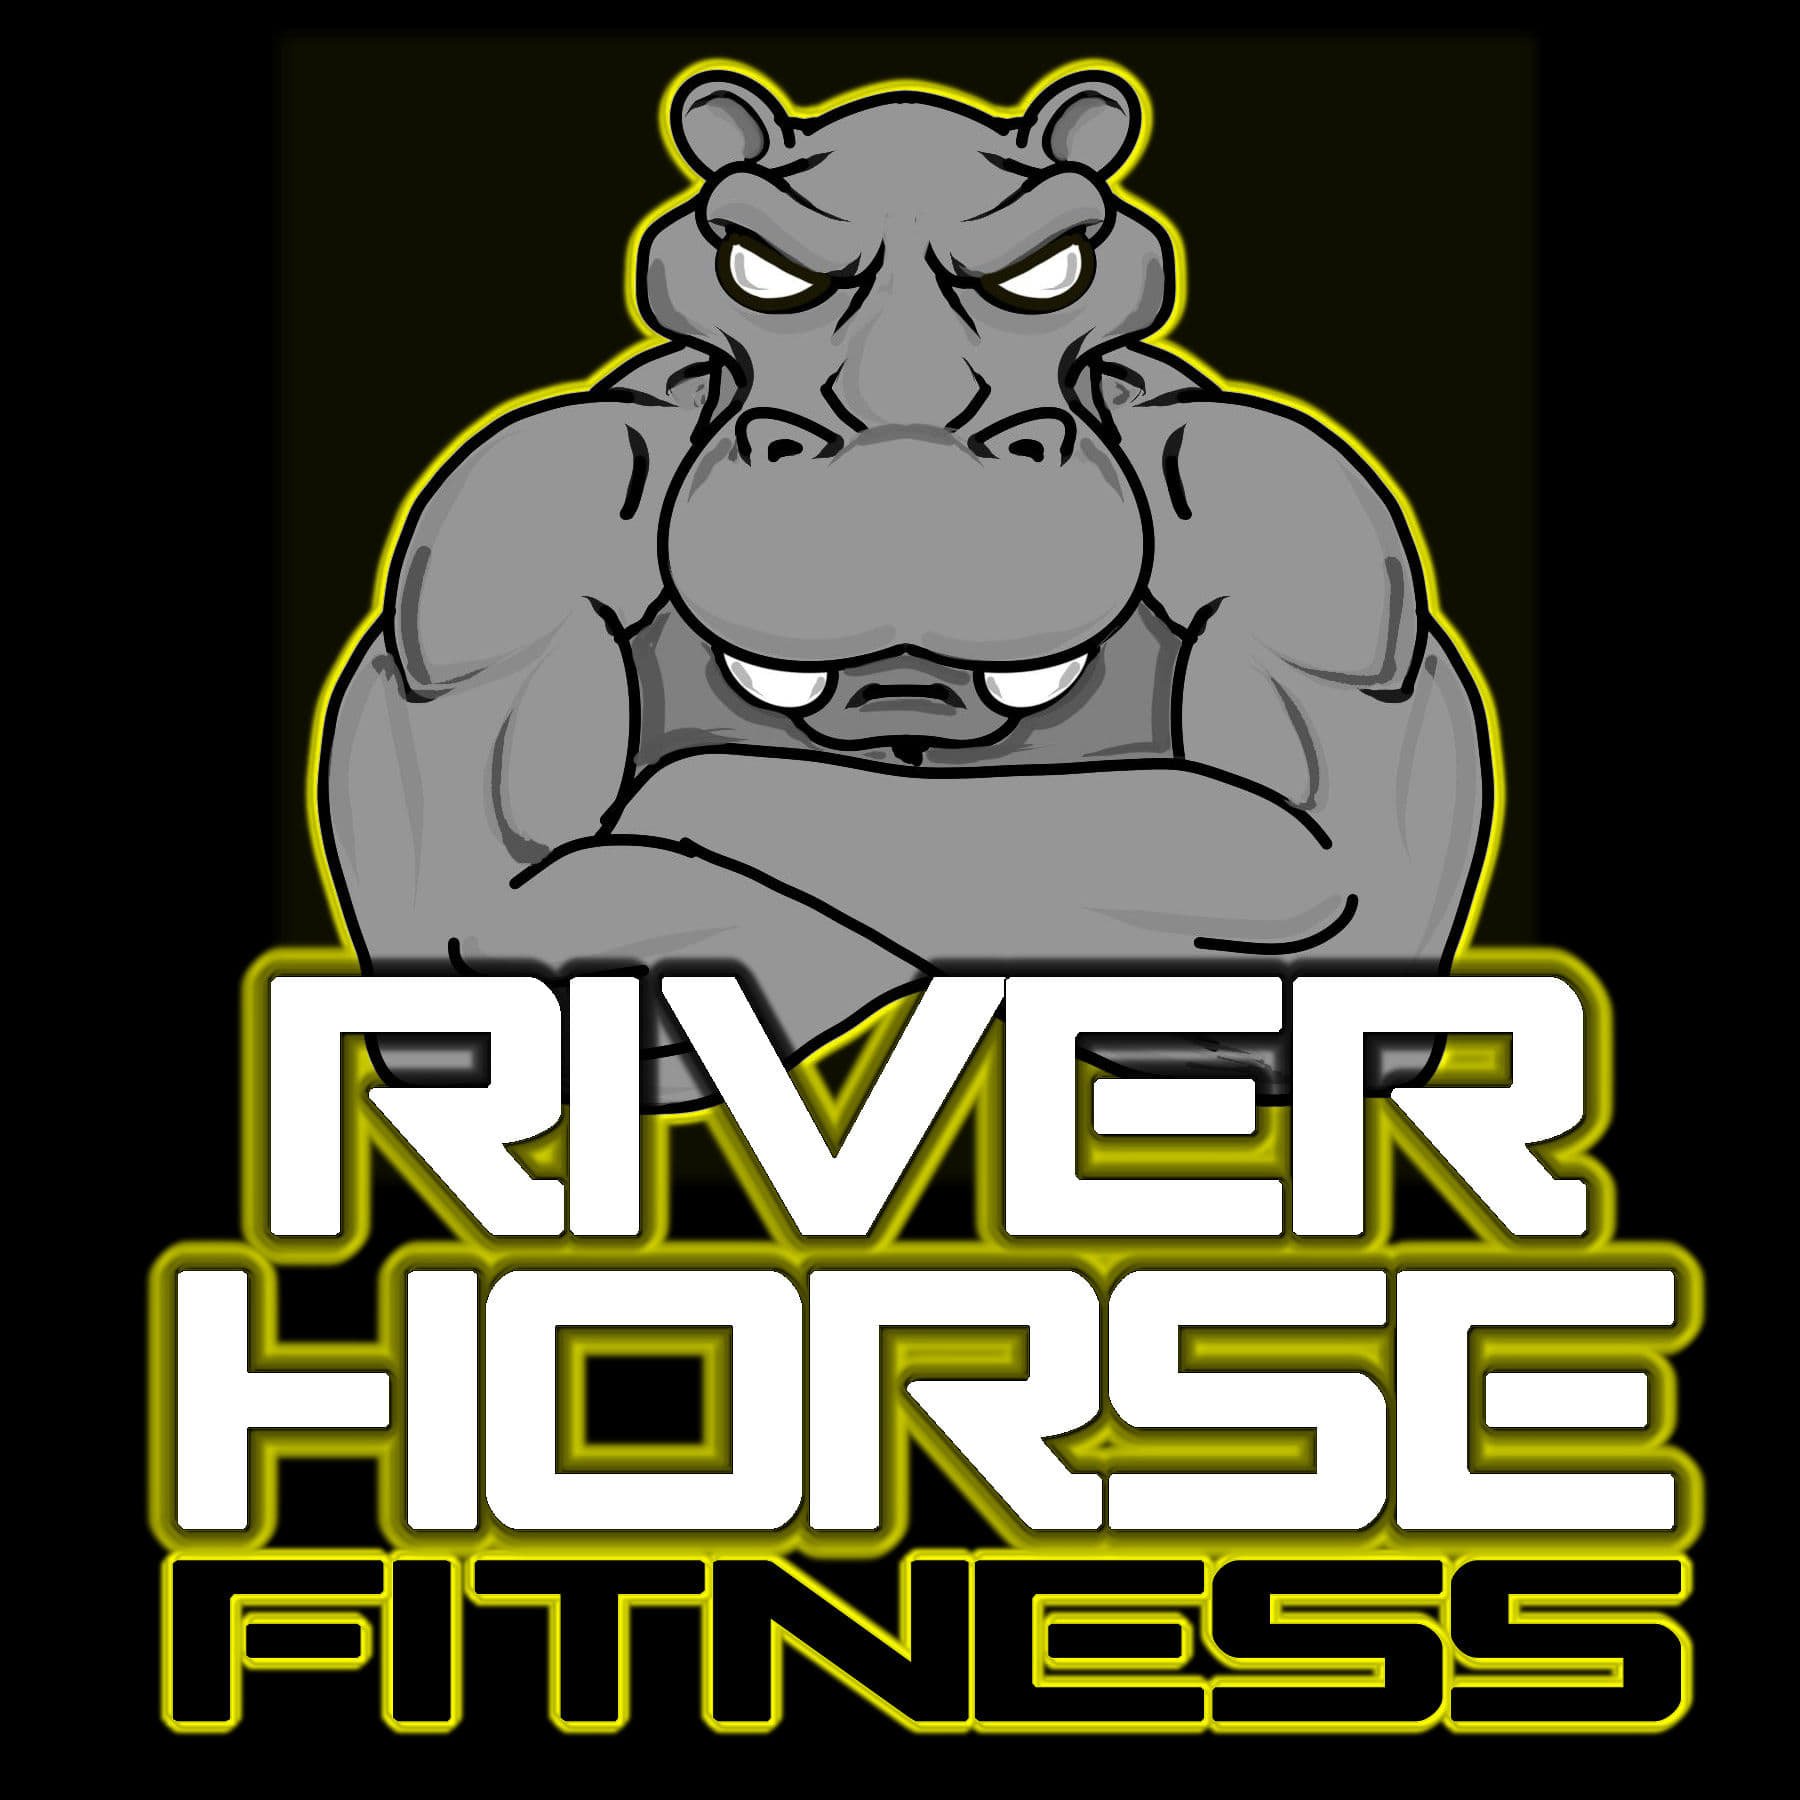 River Horse Fitness Sponsors Range War By ATR